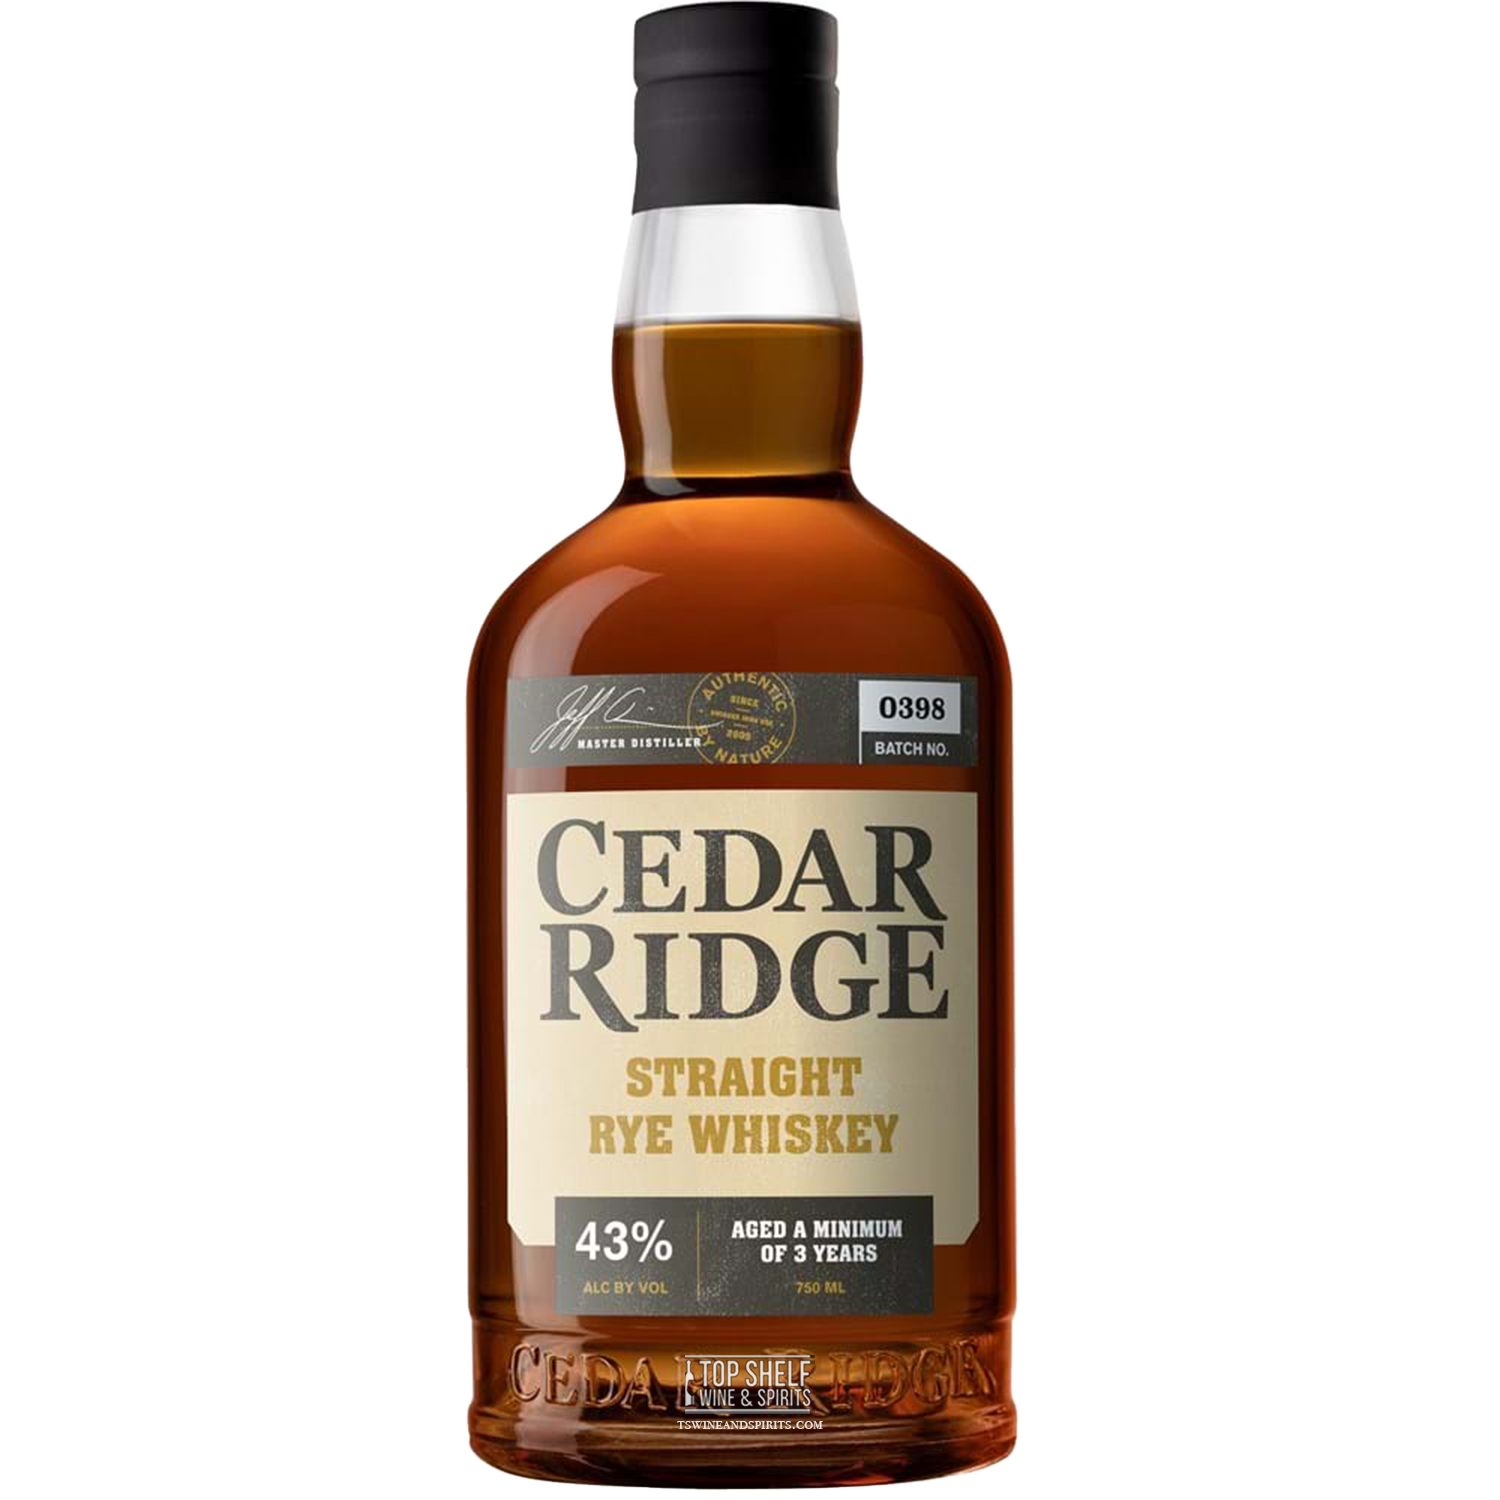 Cedar Ridge Straight Rye Whiskey